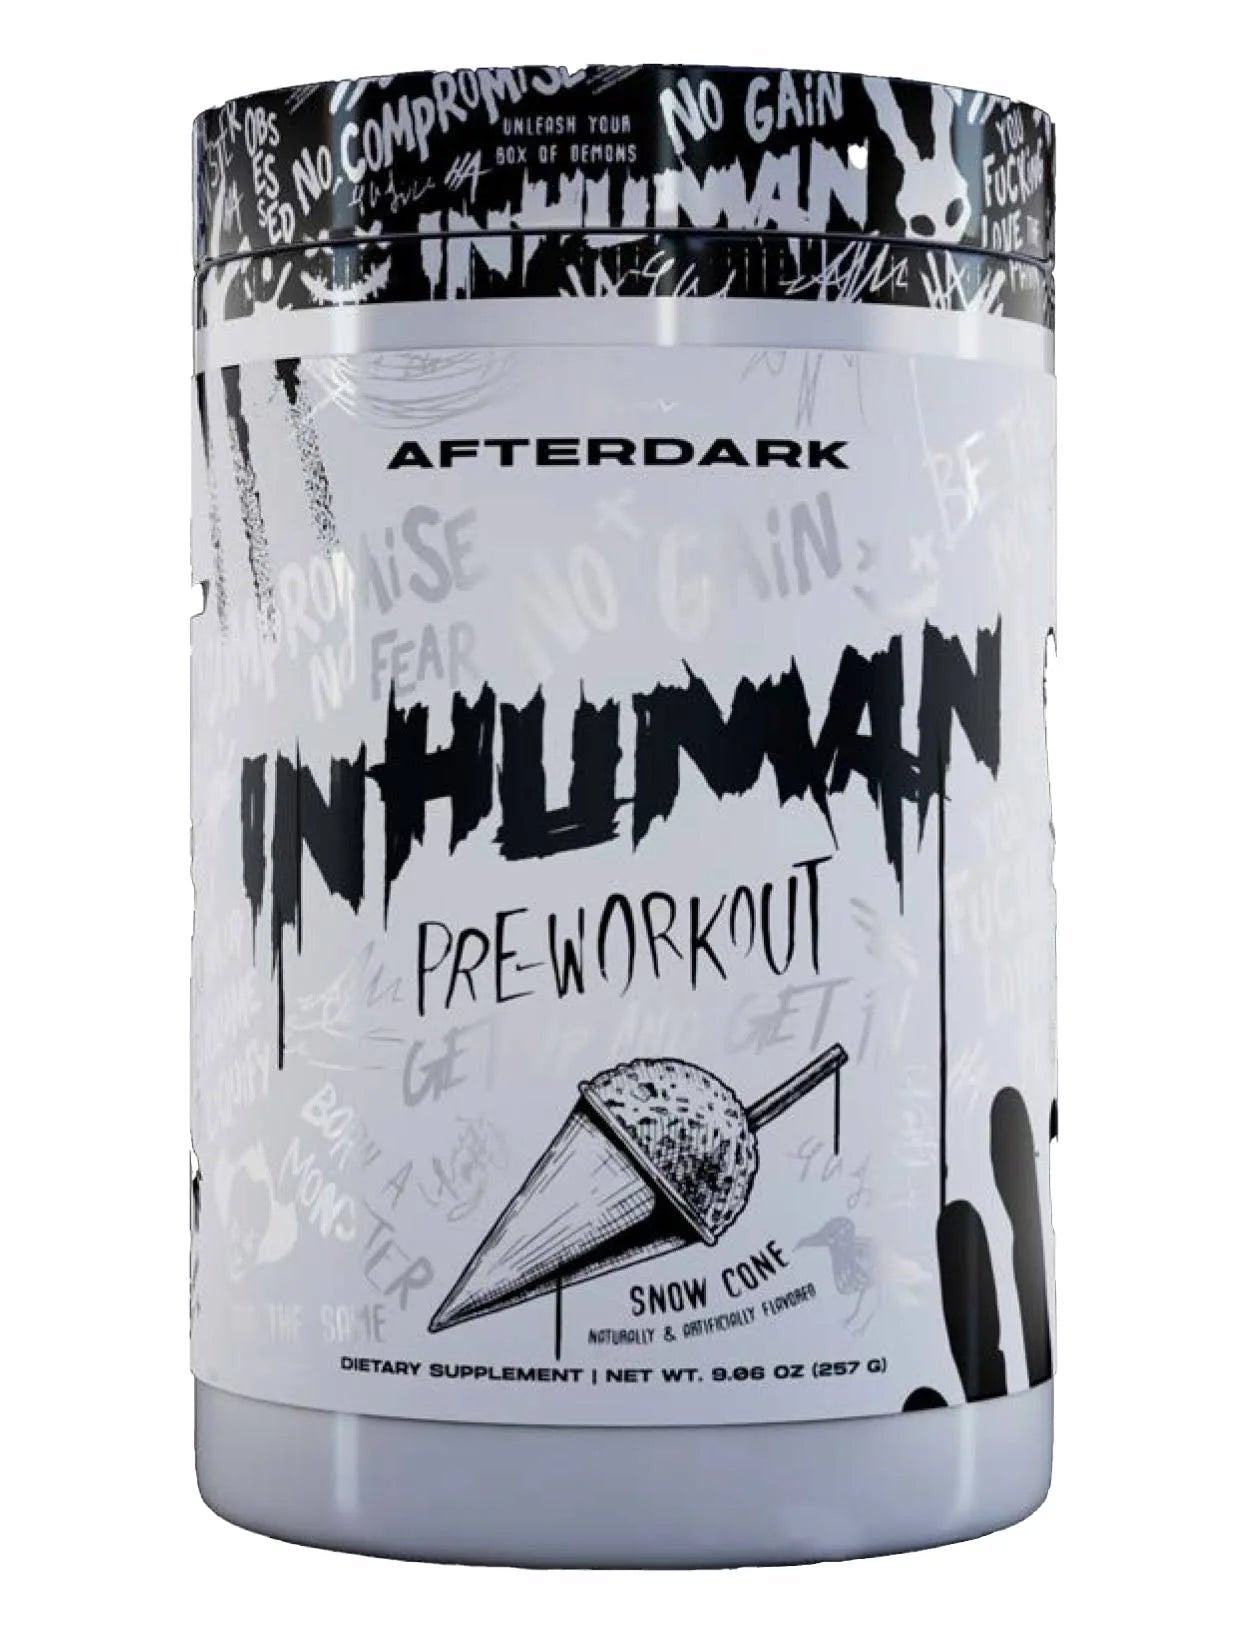 AfterDark- Inhuman PreWorkout 21 Servings - Krazy Muscle Nutrition Krazy Muscle Nutrition10055